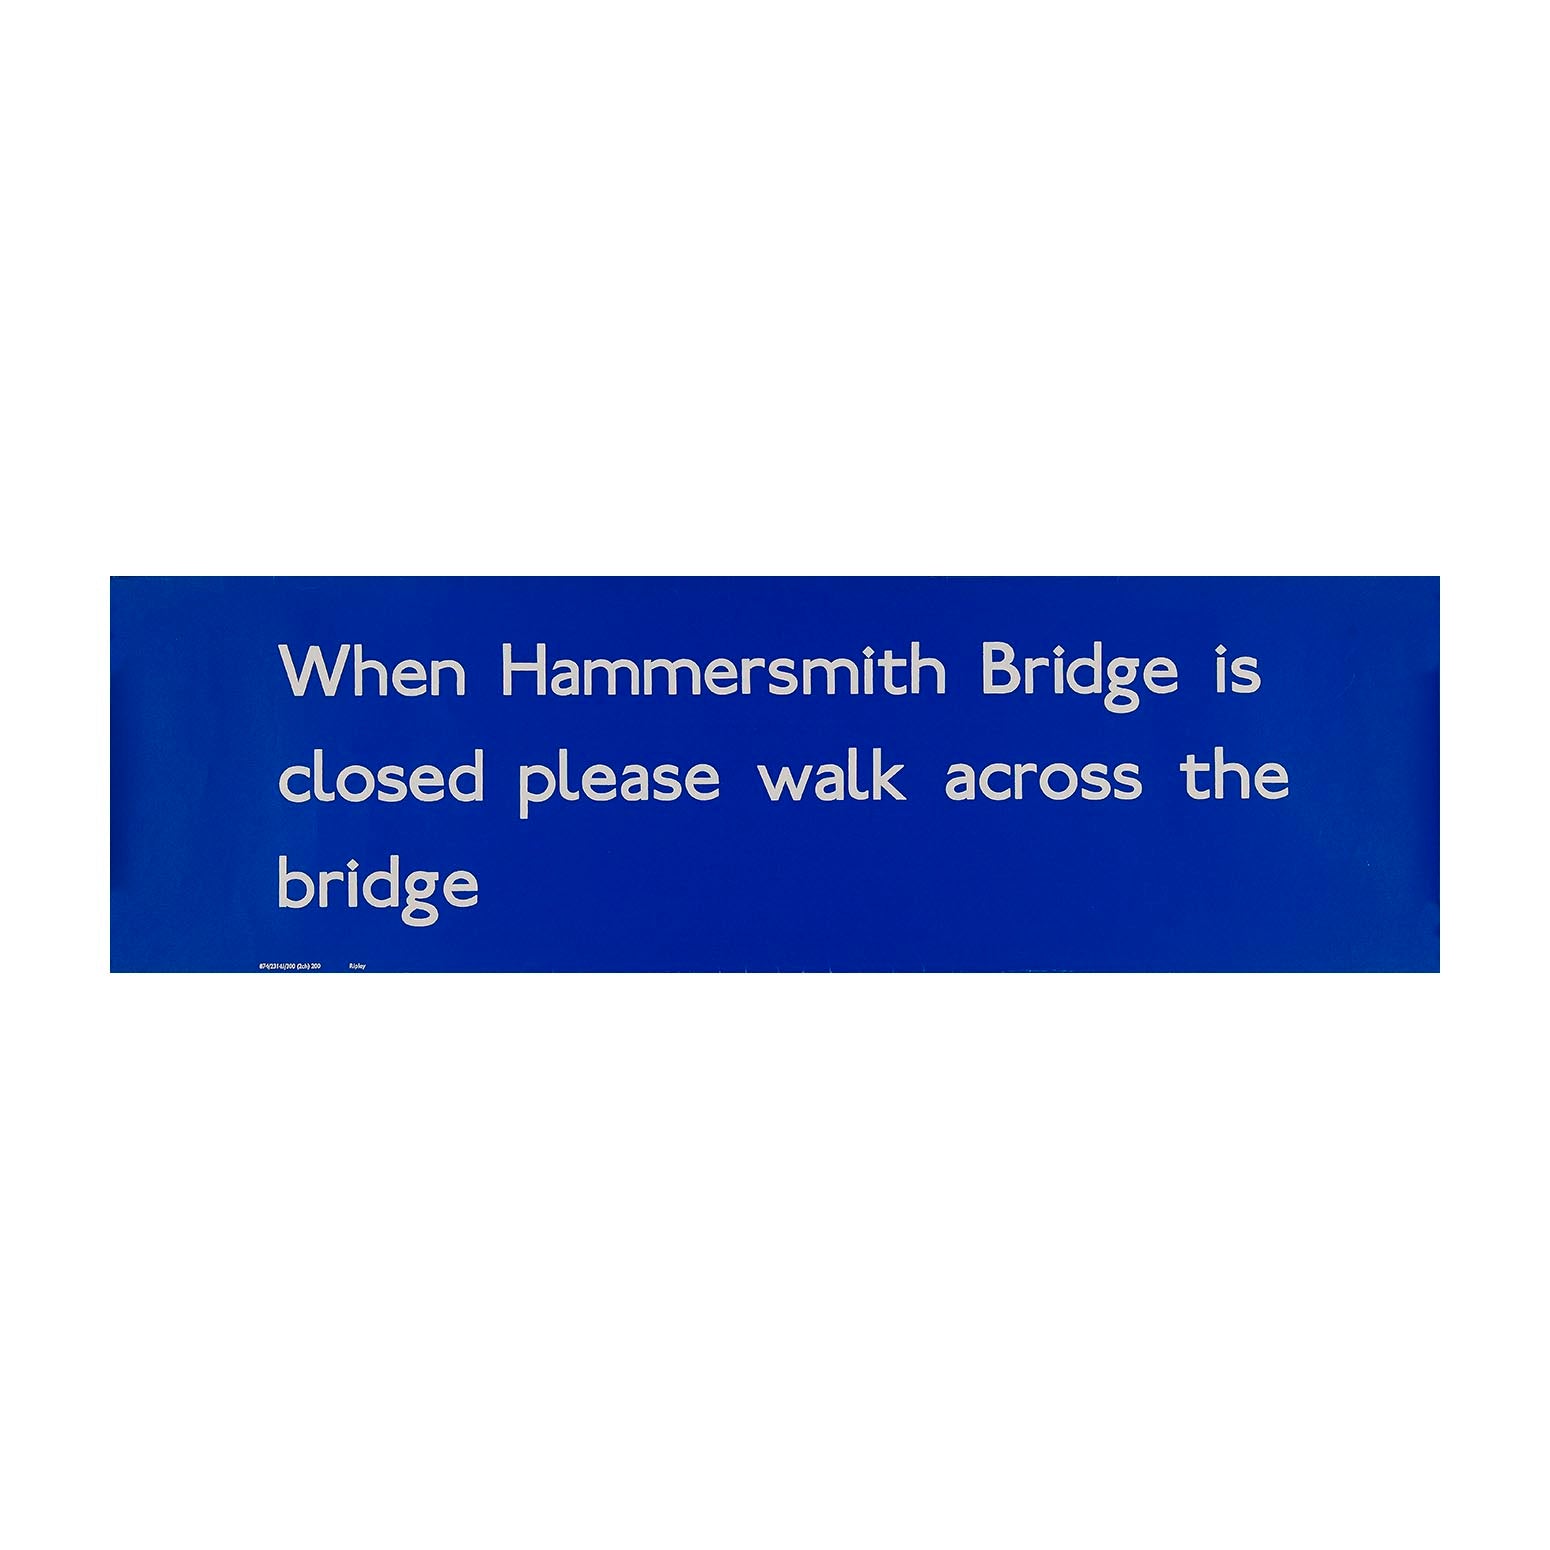 Bus information panel - When Hammersmith Bridge is closed please walk across the bridge